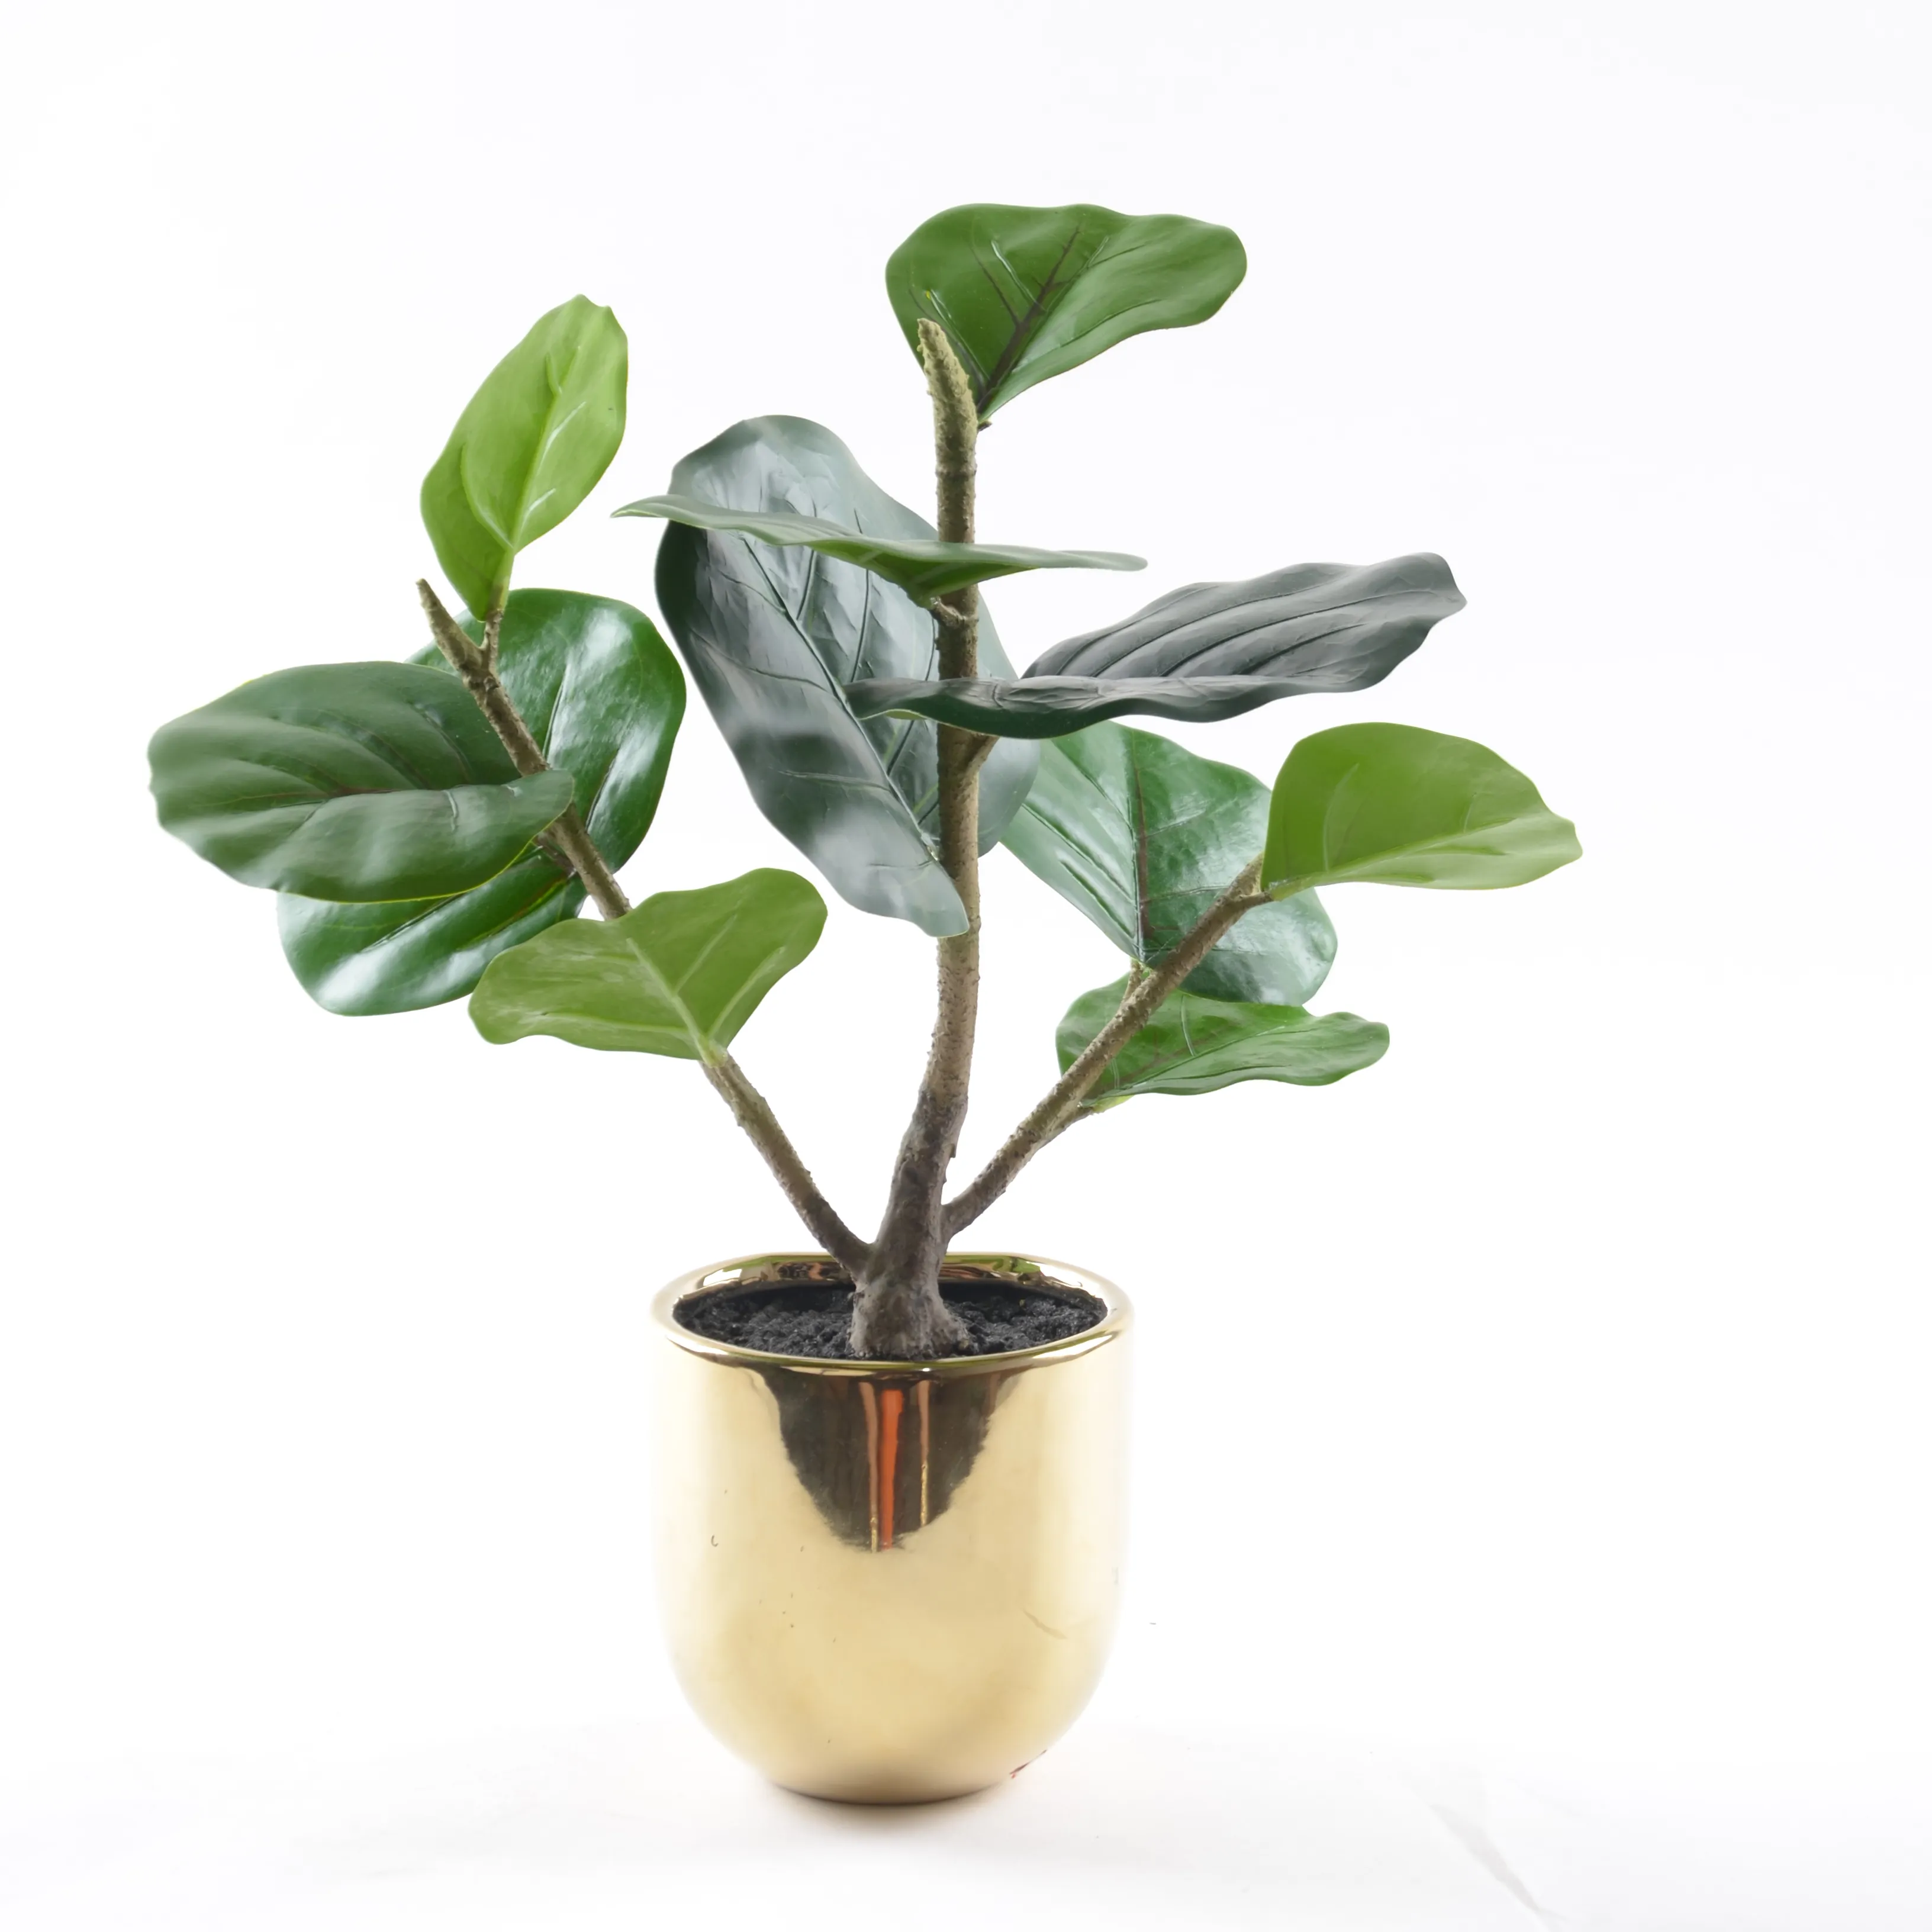 Nifloral Home Design Plastic Small Bonsai Artificial Potted Plants Ficus lyrata Tree for Table Home Decor